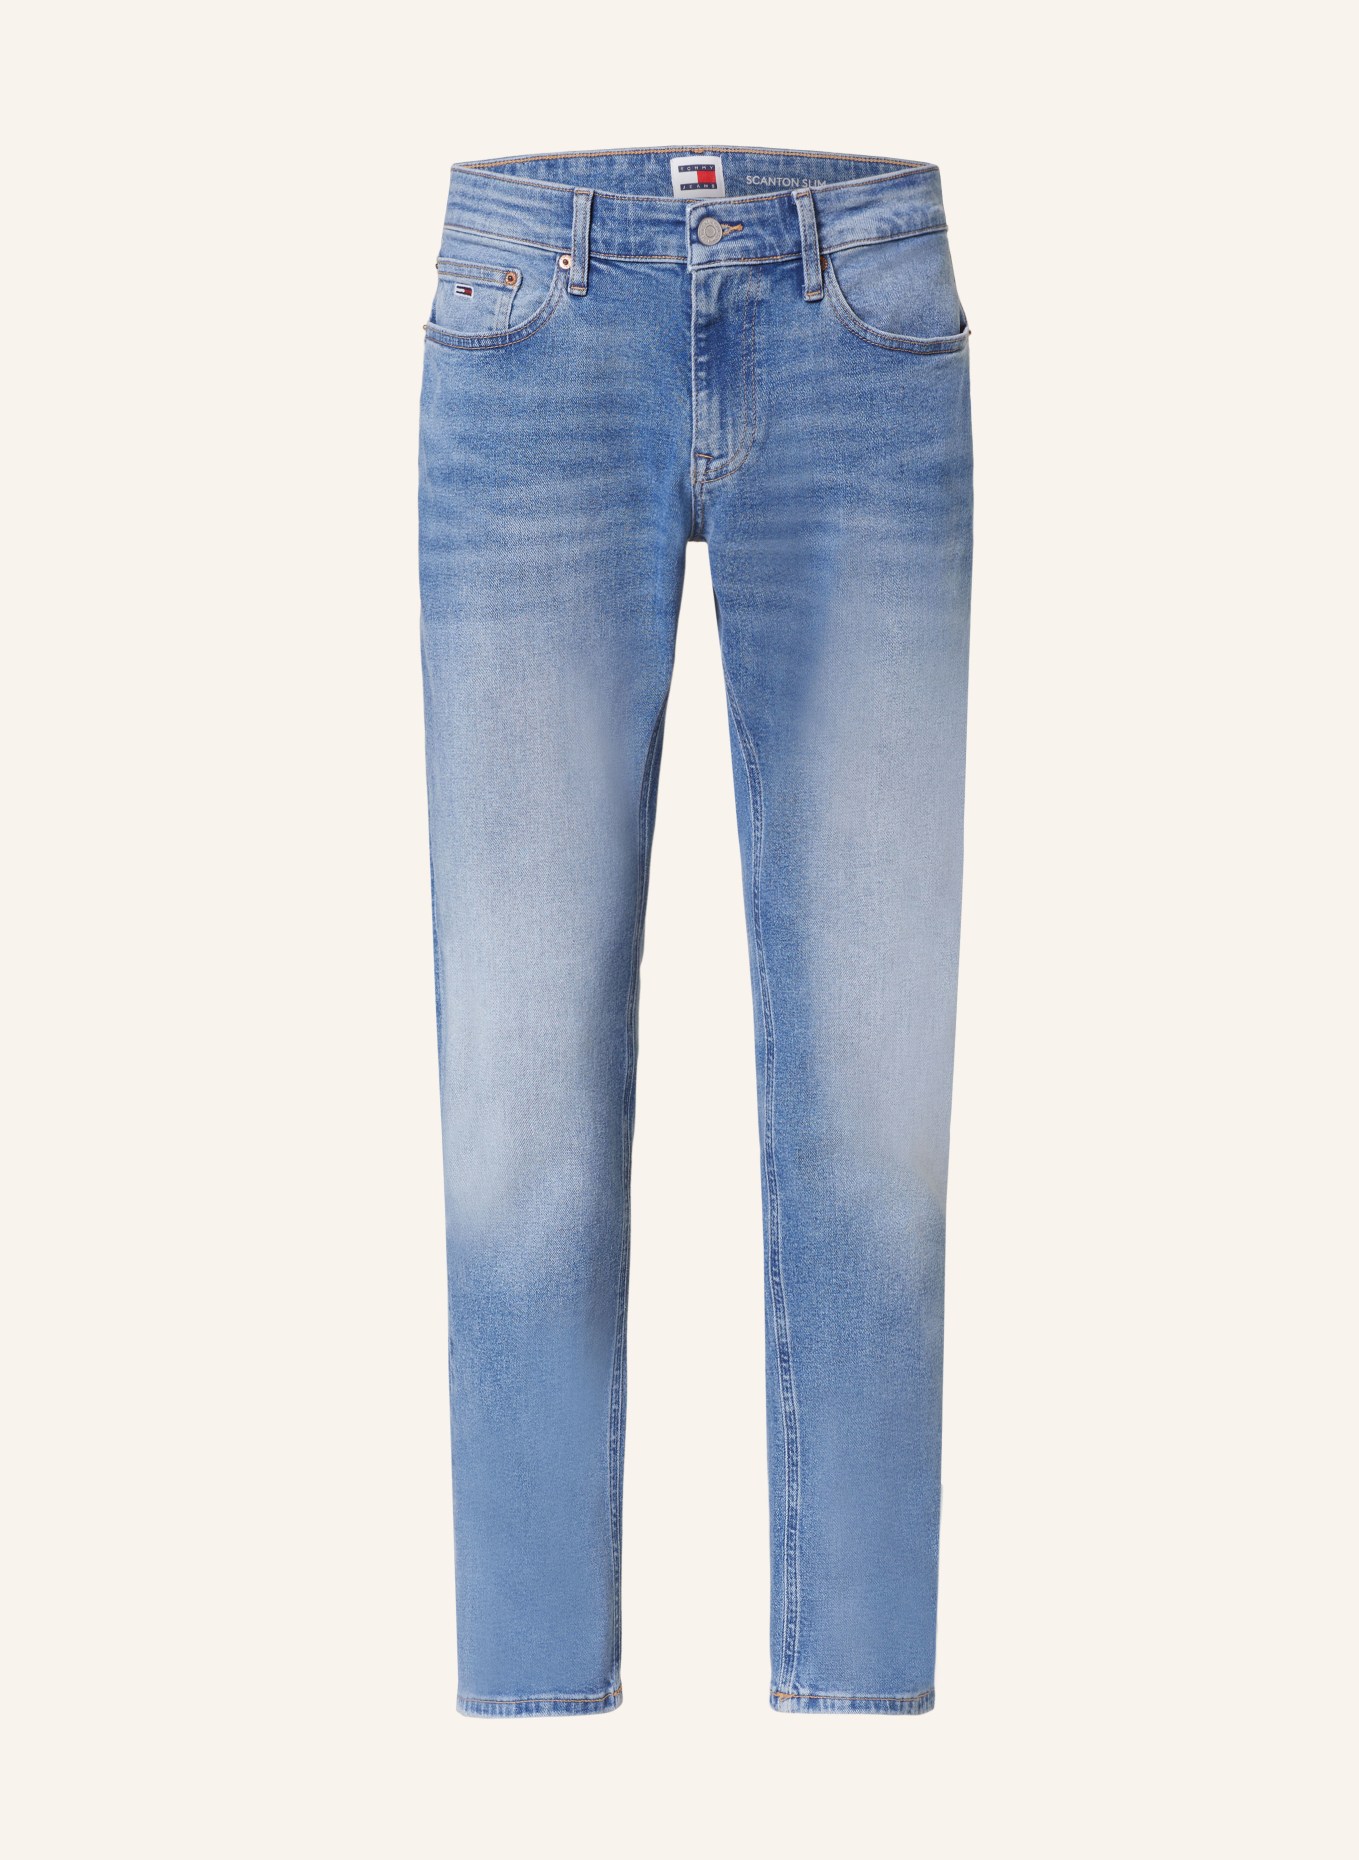 TOMMY JEANS Jeans SCANTON Slim Fit, Farbe: 1AB Denim Light (Bild 1)